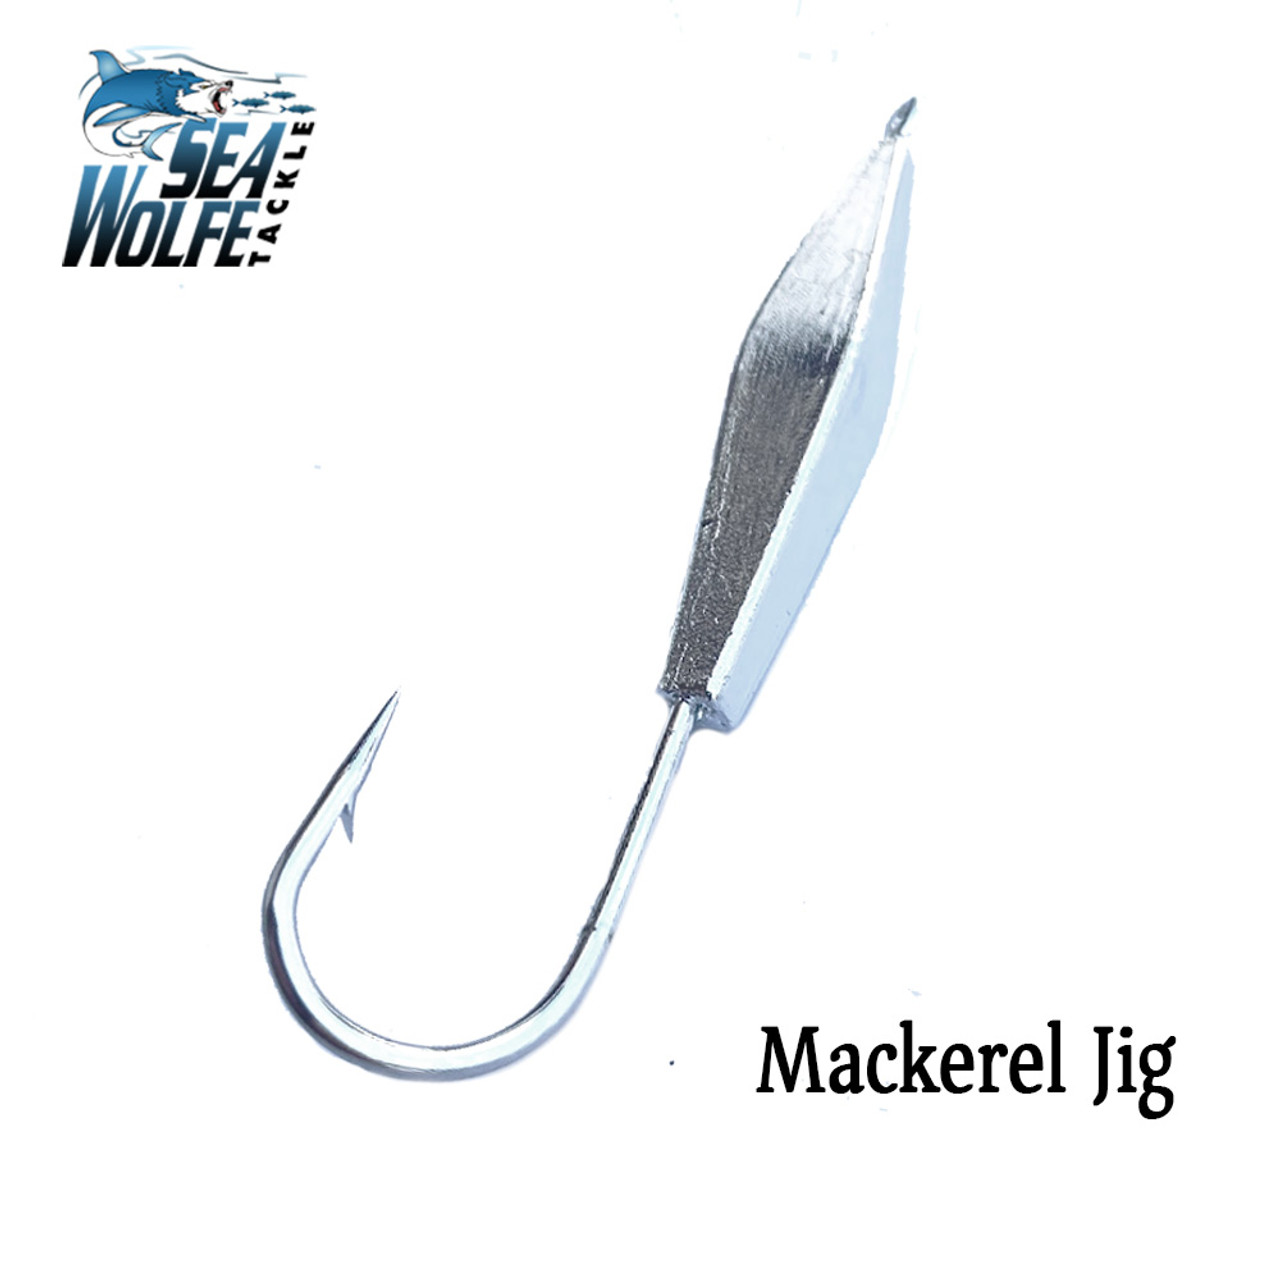 SeaWolfe Mackerel Jigs (1/4 oz) | Tomo's Tackle